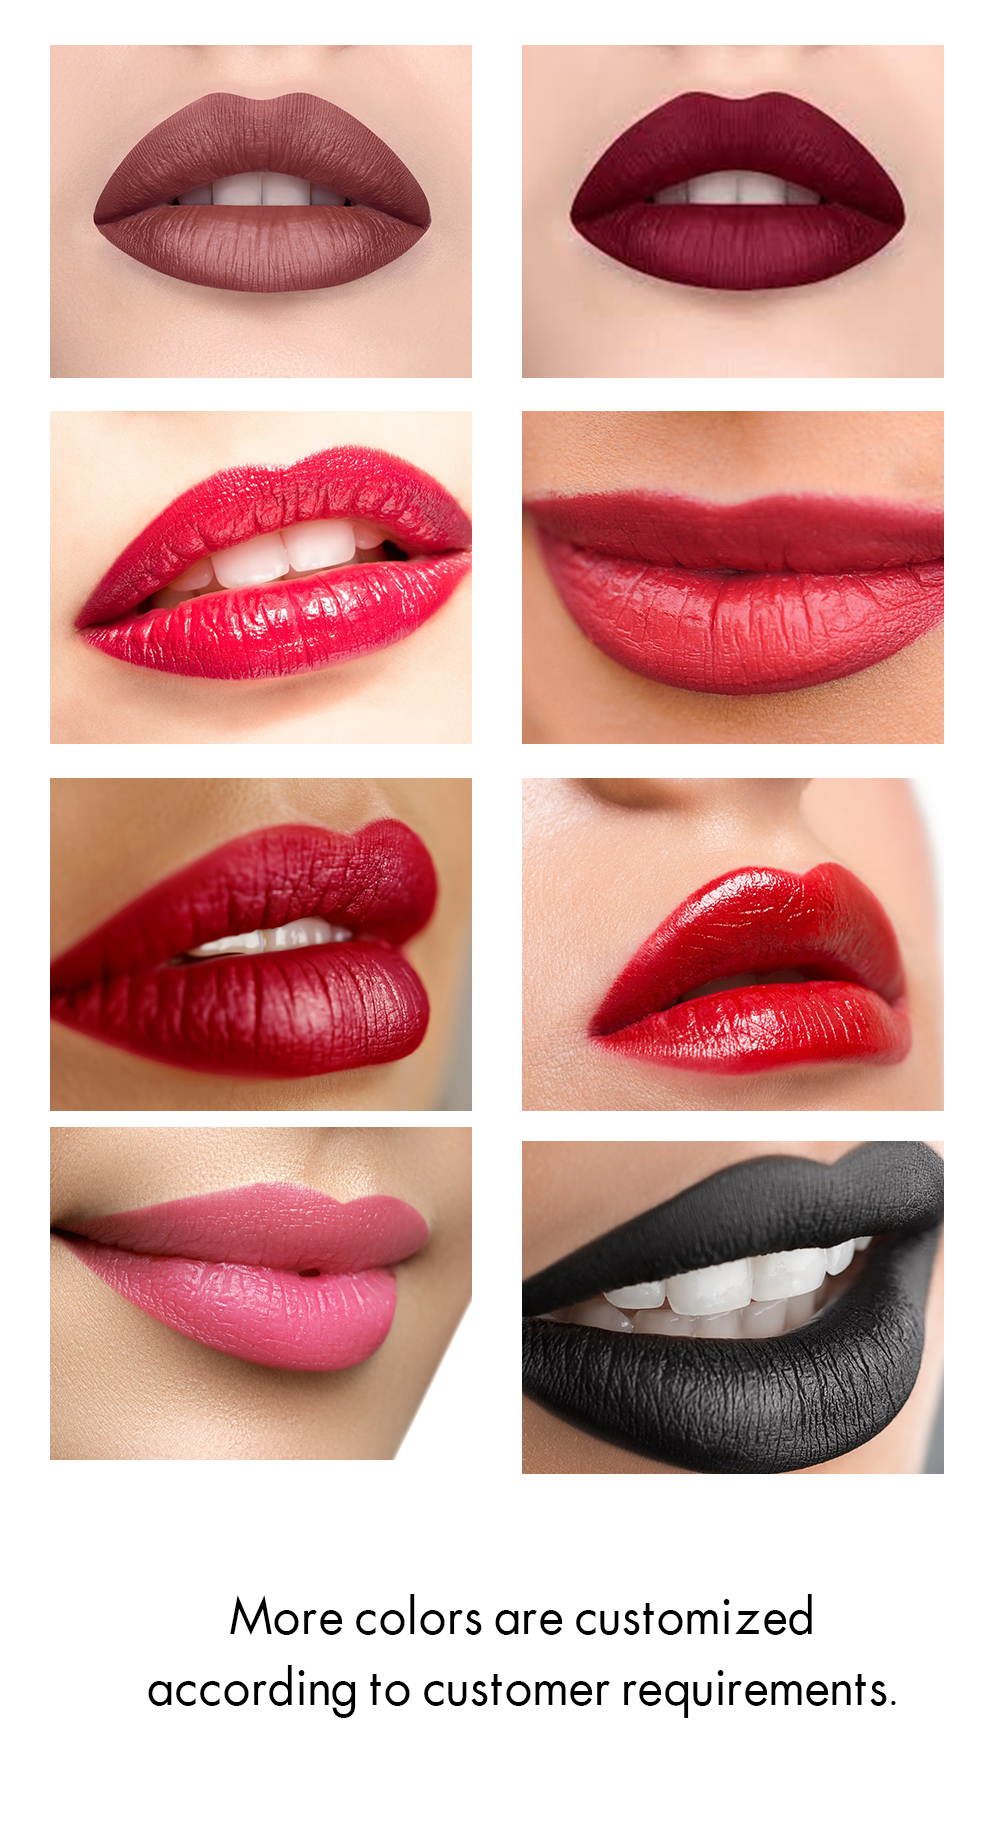 2. Six-color lipstick color card